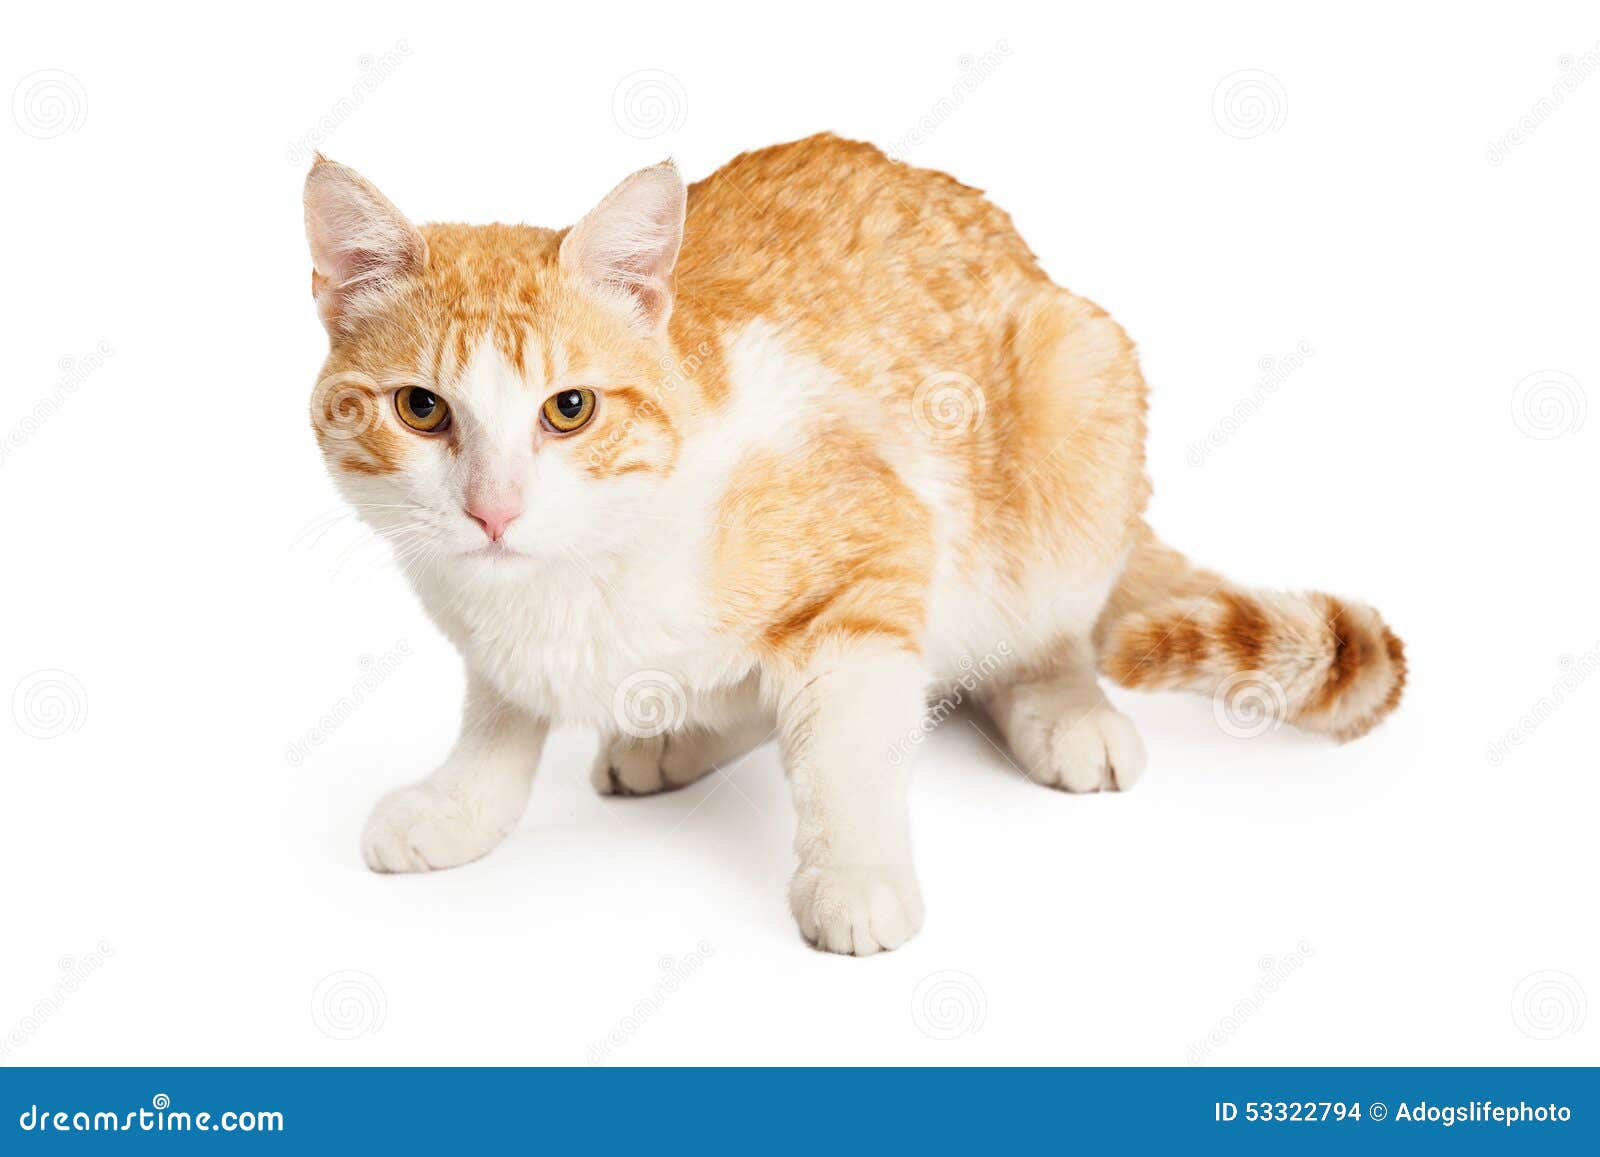 Beautiful Orange And White Mixed Breed Cat Stock Photo ...